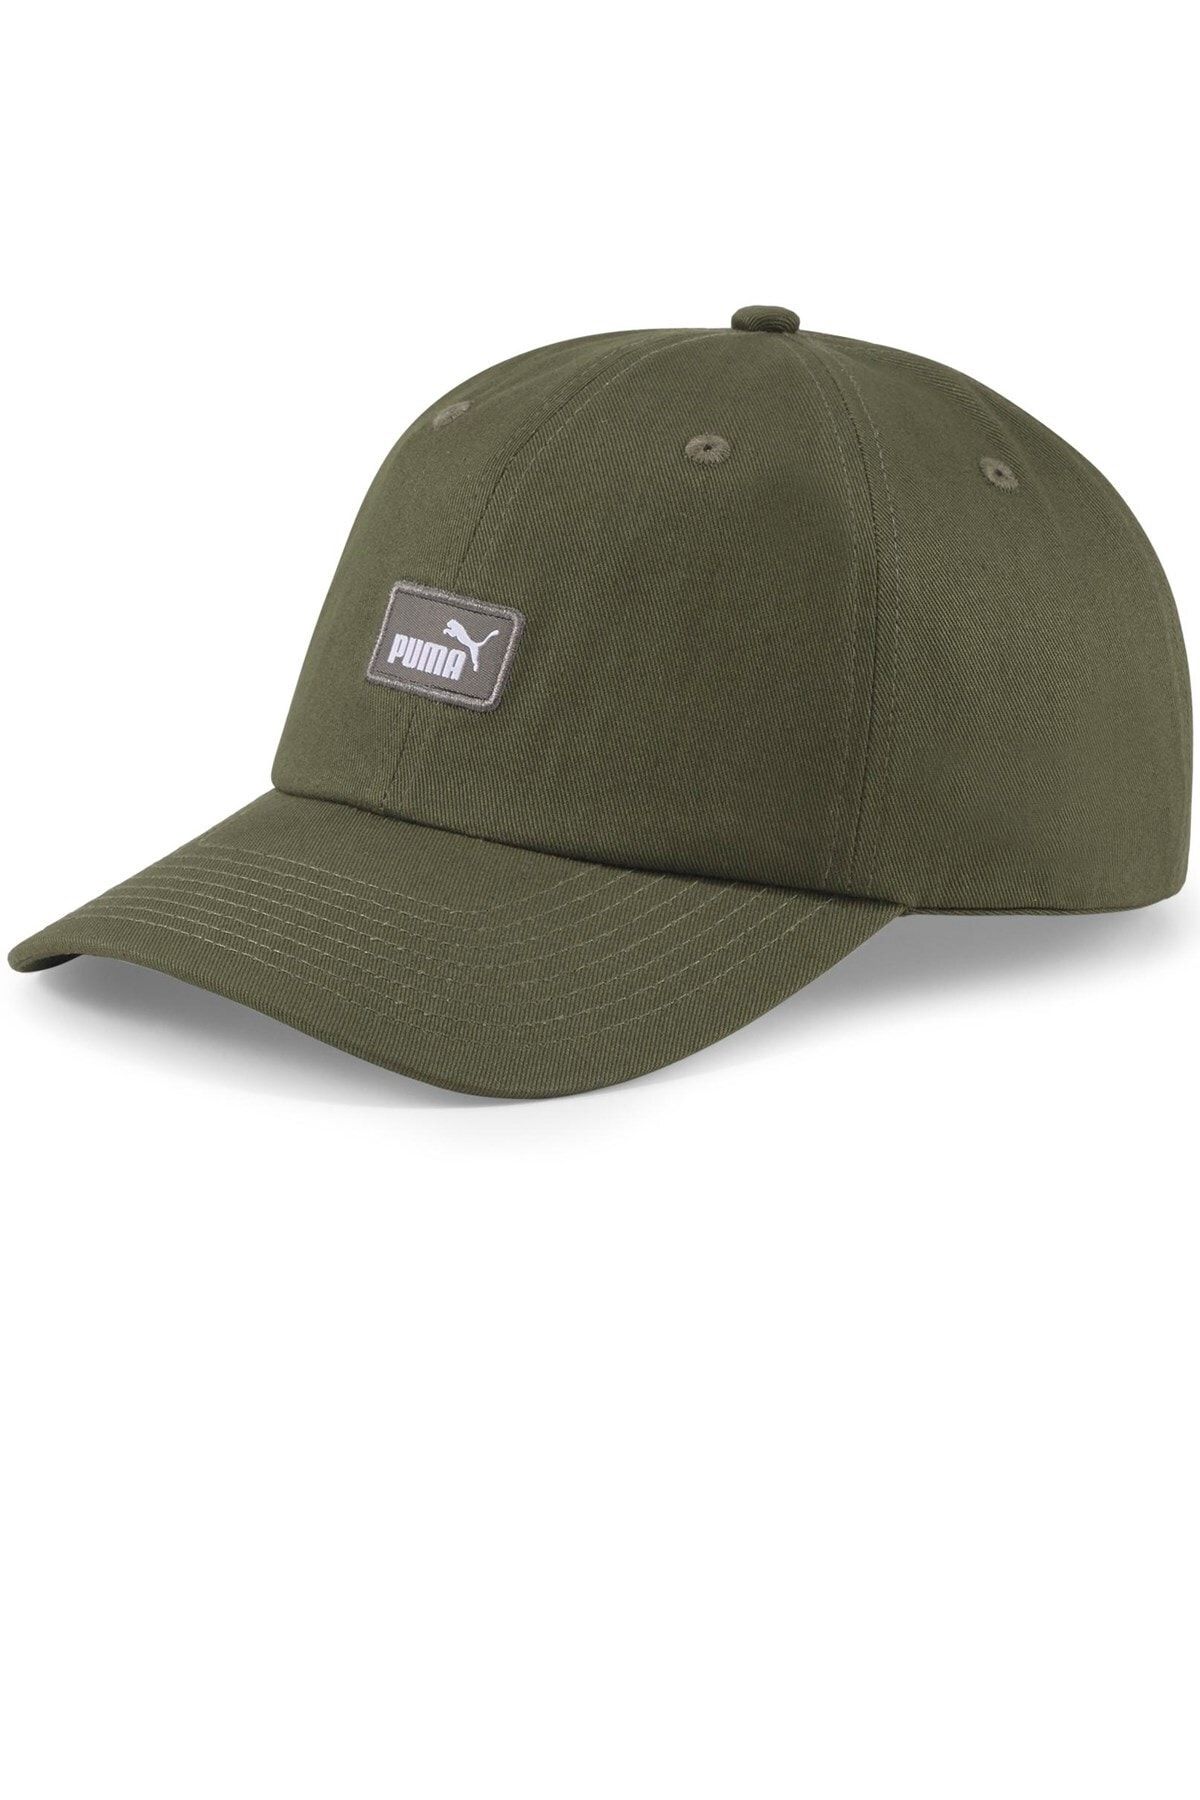 Puma Ess Cap Iıı Erkek Şapka 02366909